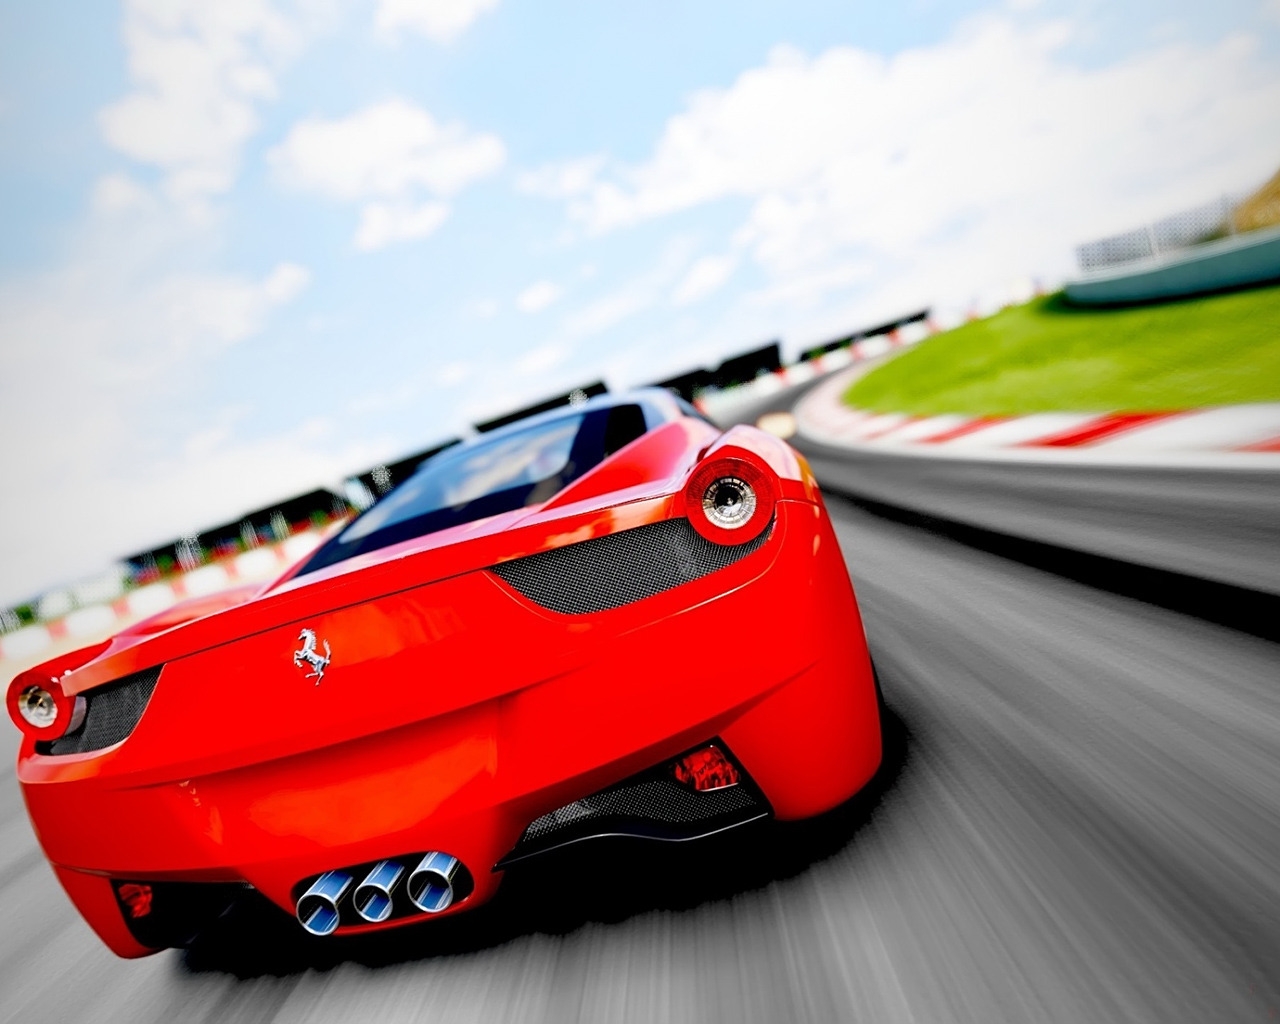 Gorgeous Red Ferrari for 1280 x 1024 resolution